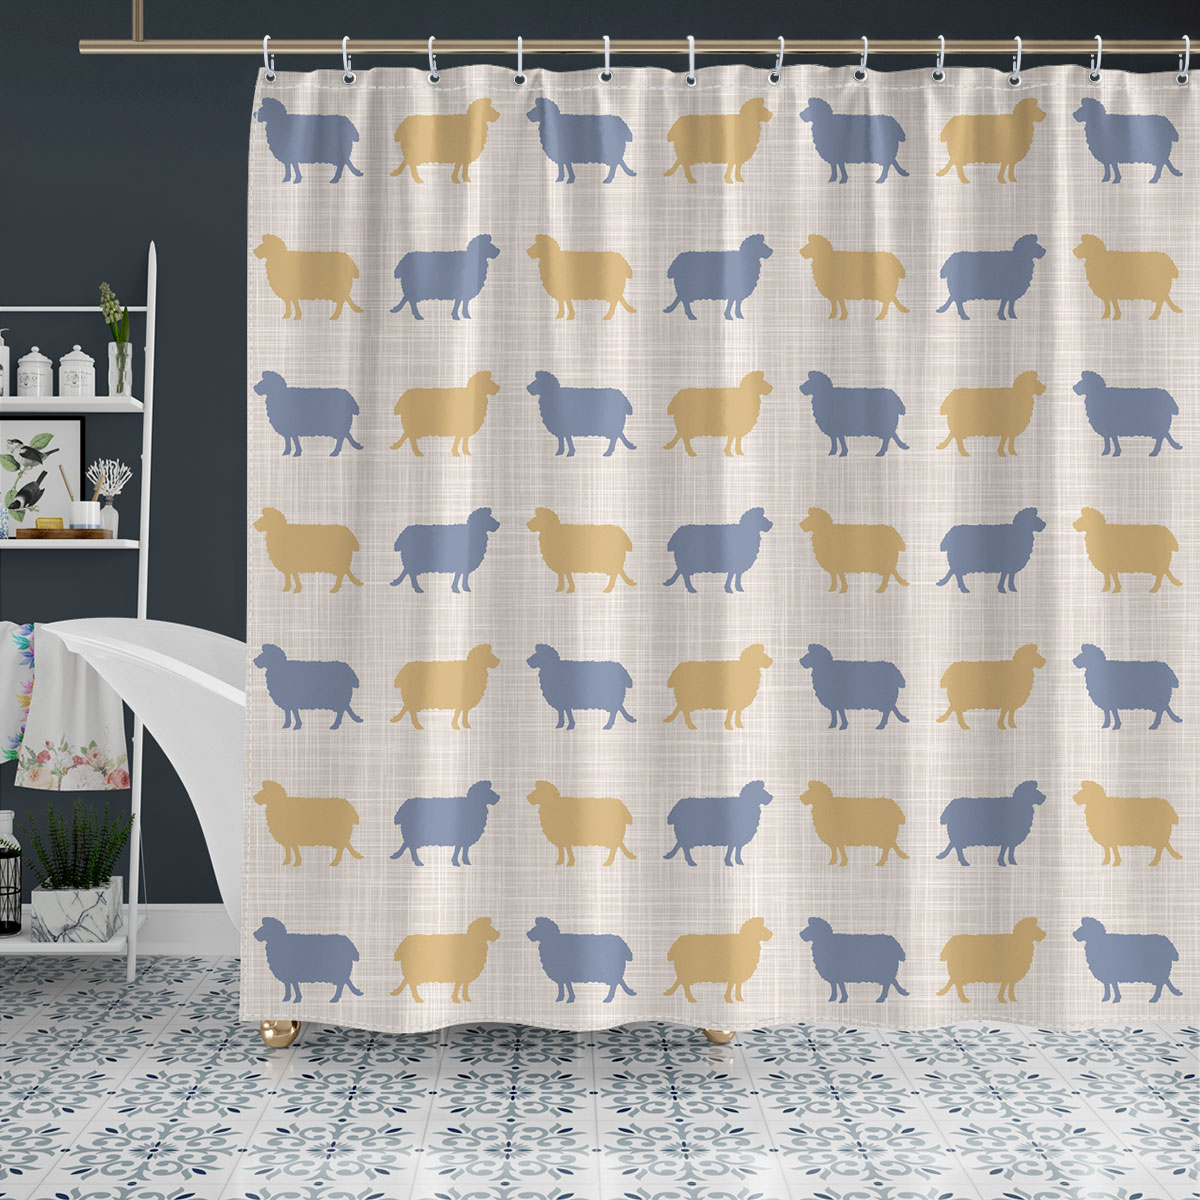 Sheep Silhouette Pattern Shower Curtain